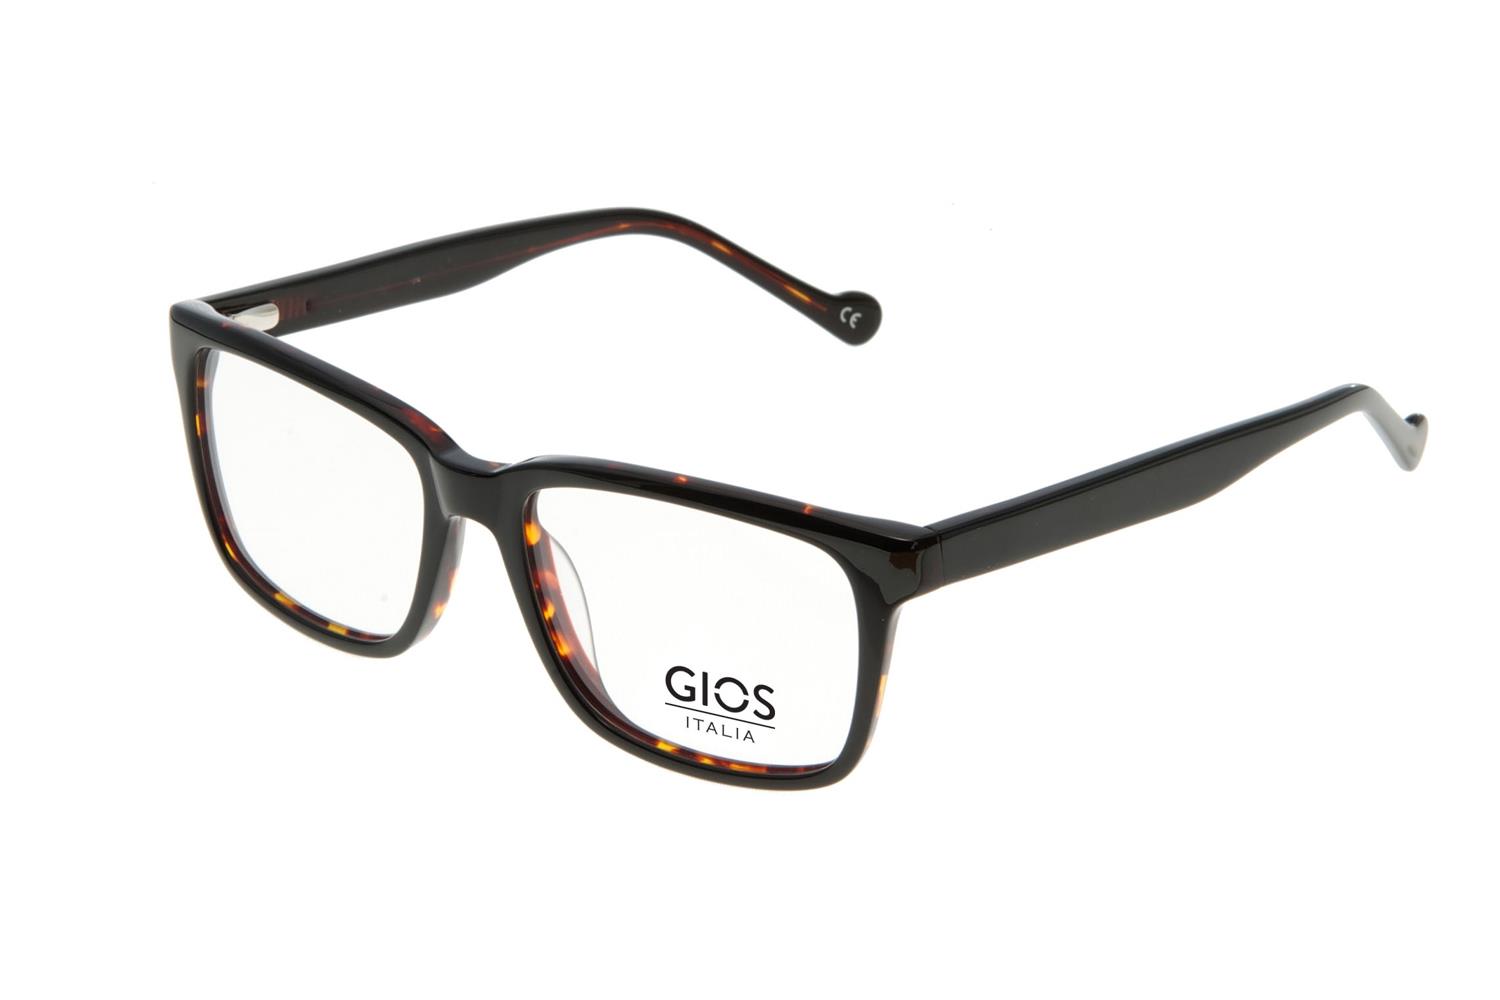 Picture of Gios Italia Eyeglasses RF500047